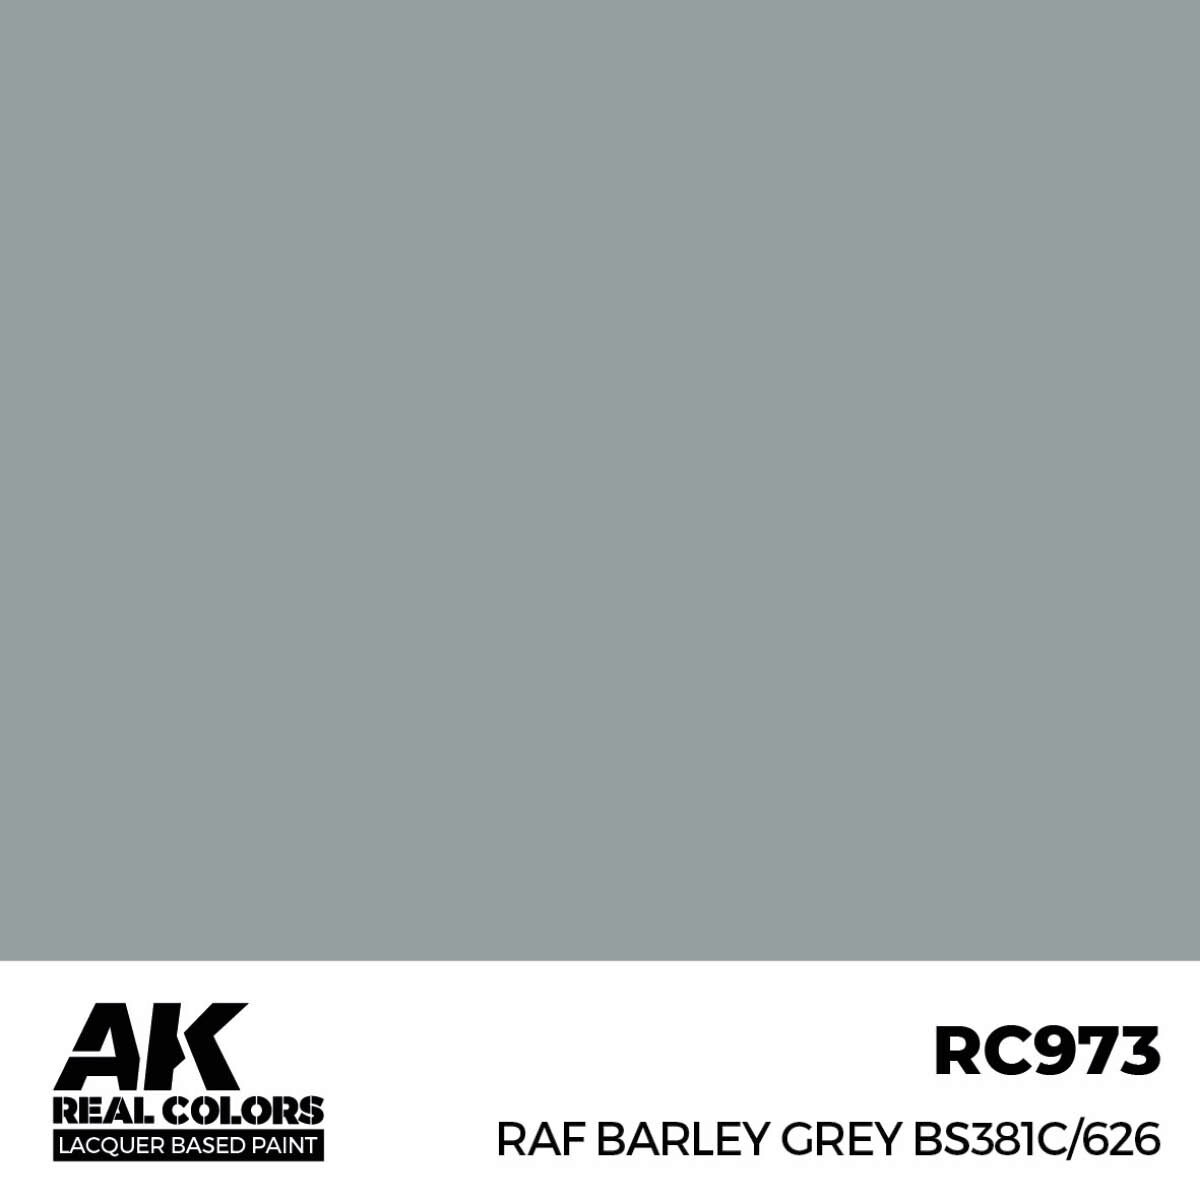 AK RC973 Real Colors RAF Barley Grey BS381C/626 17 ml.